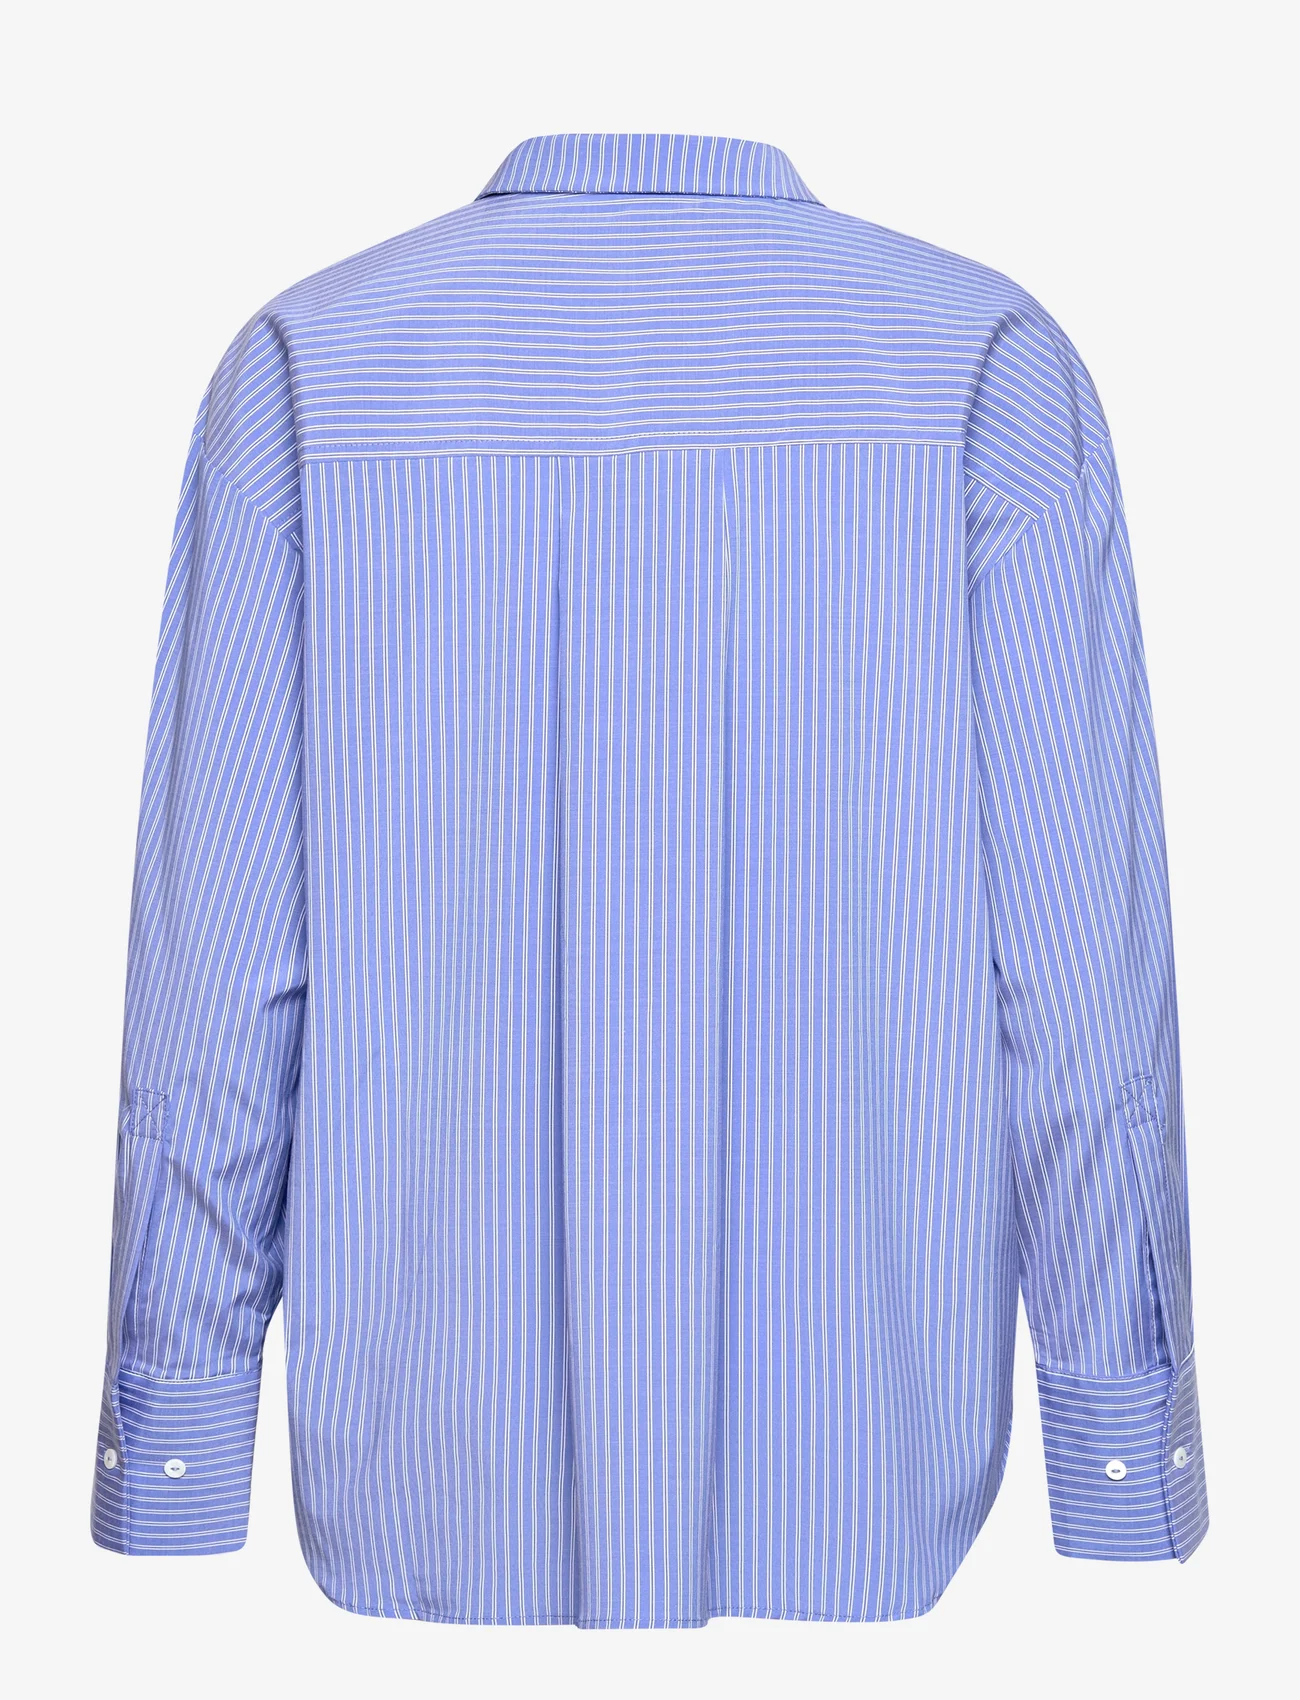 Sofie Schnoor - Shirt - langærmede skjorter - blue striped - 1